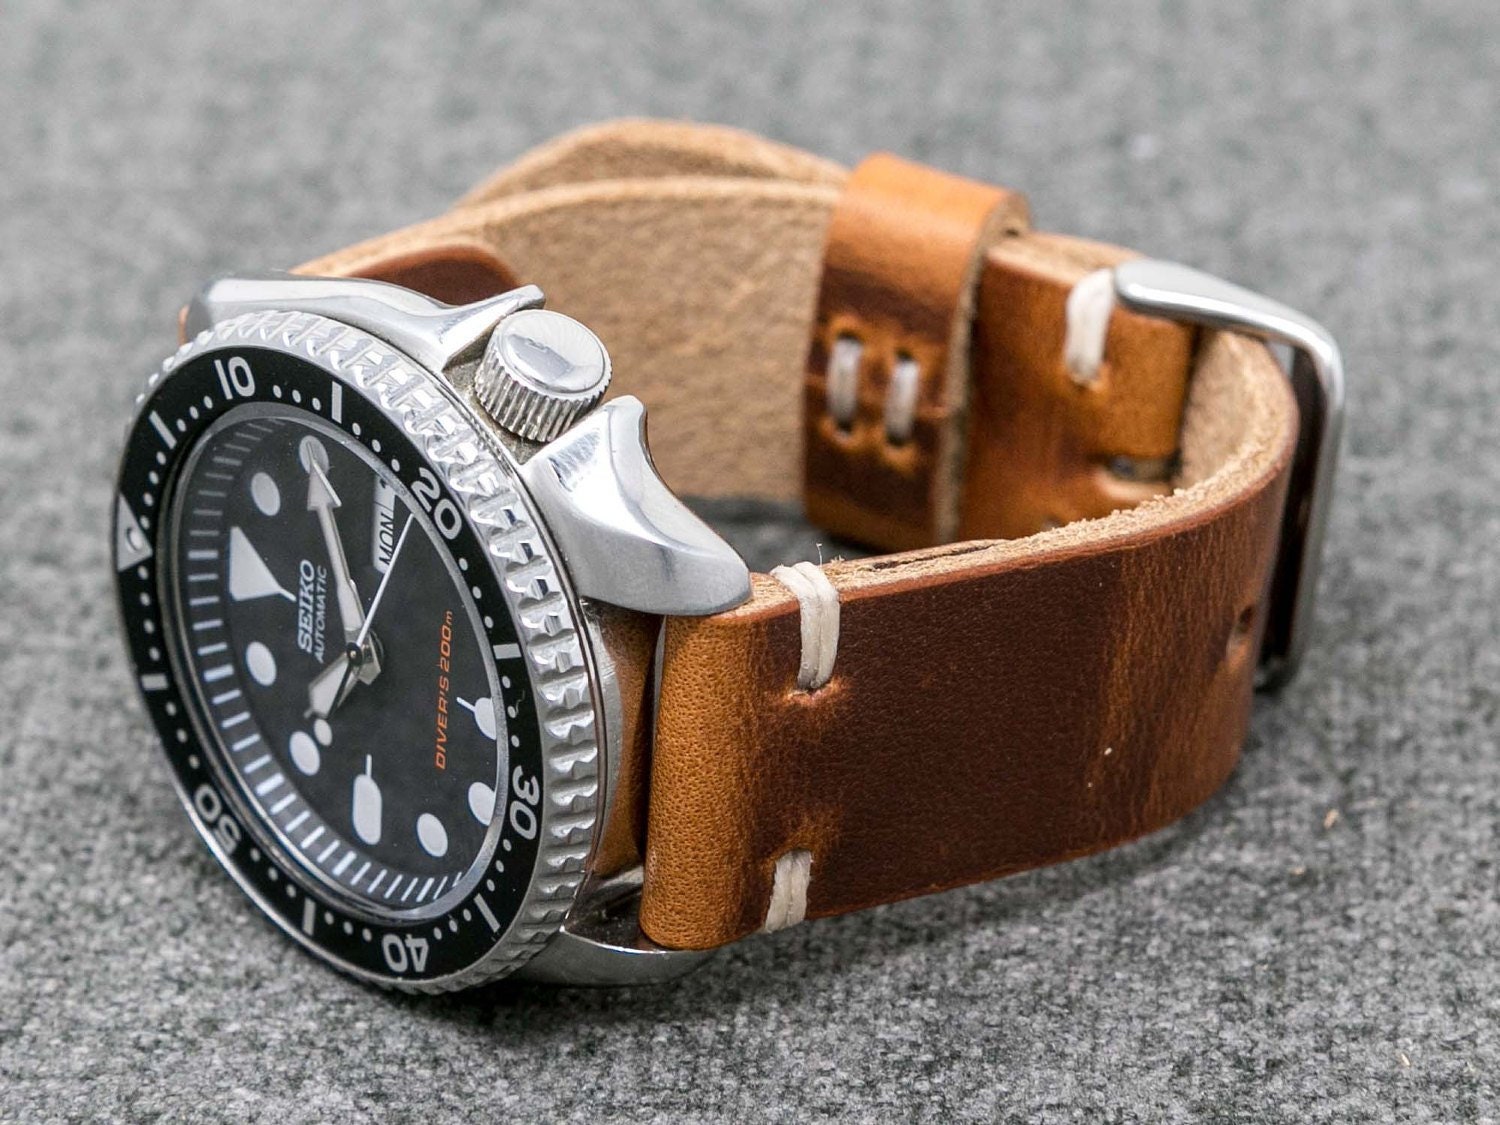 ThreadedLeatherCo Vintage Style Leather Watch Strap